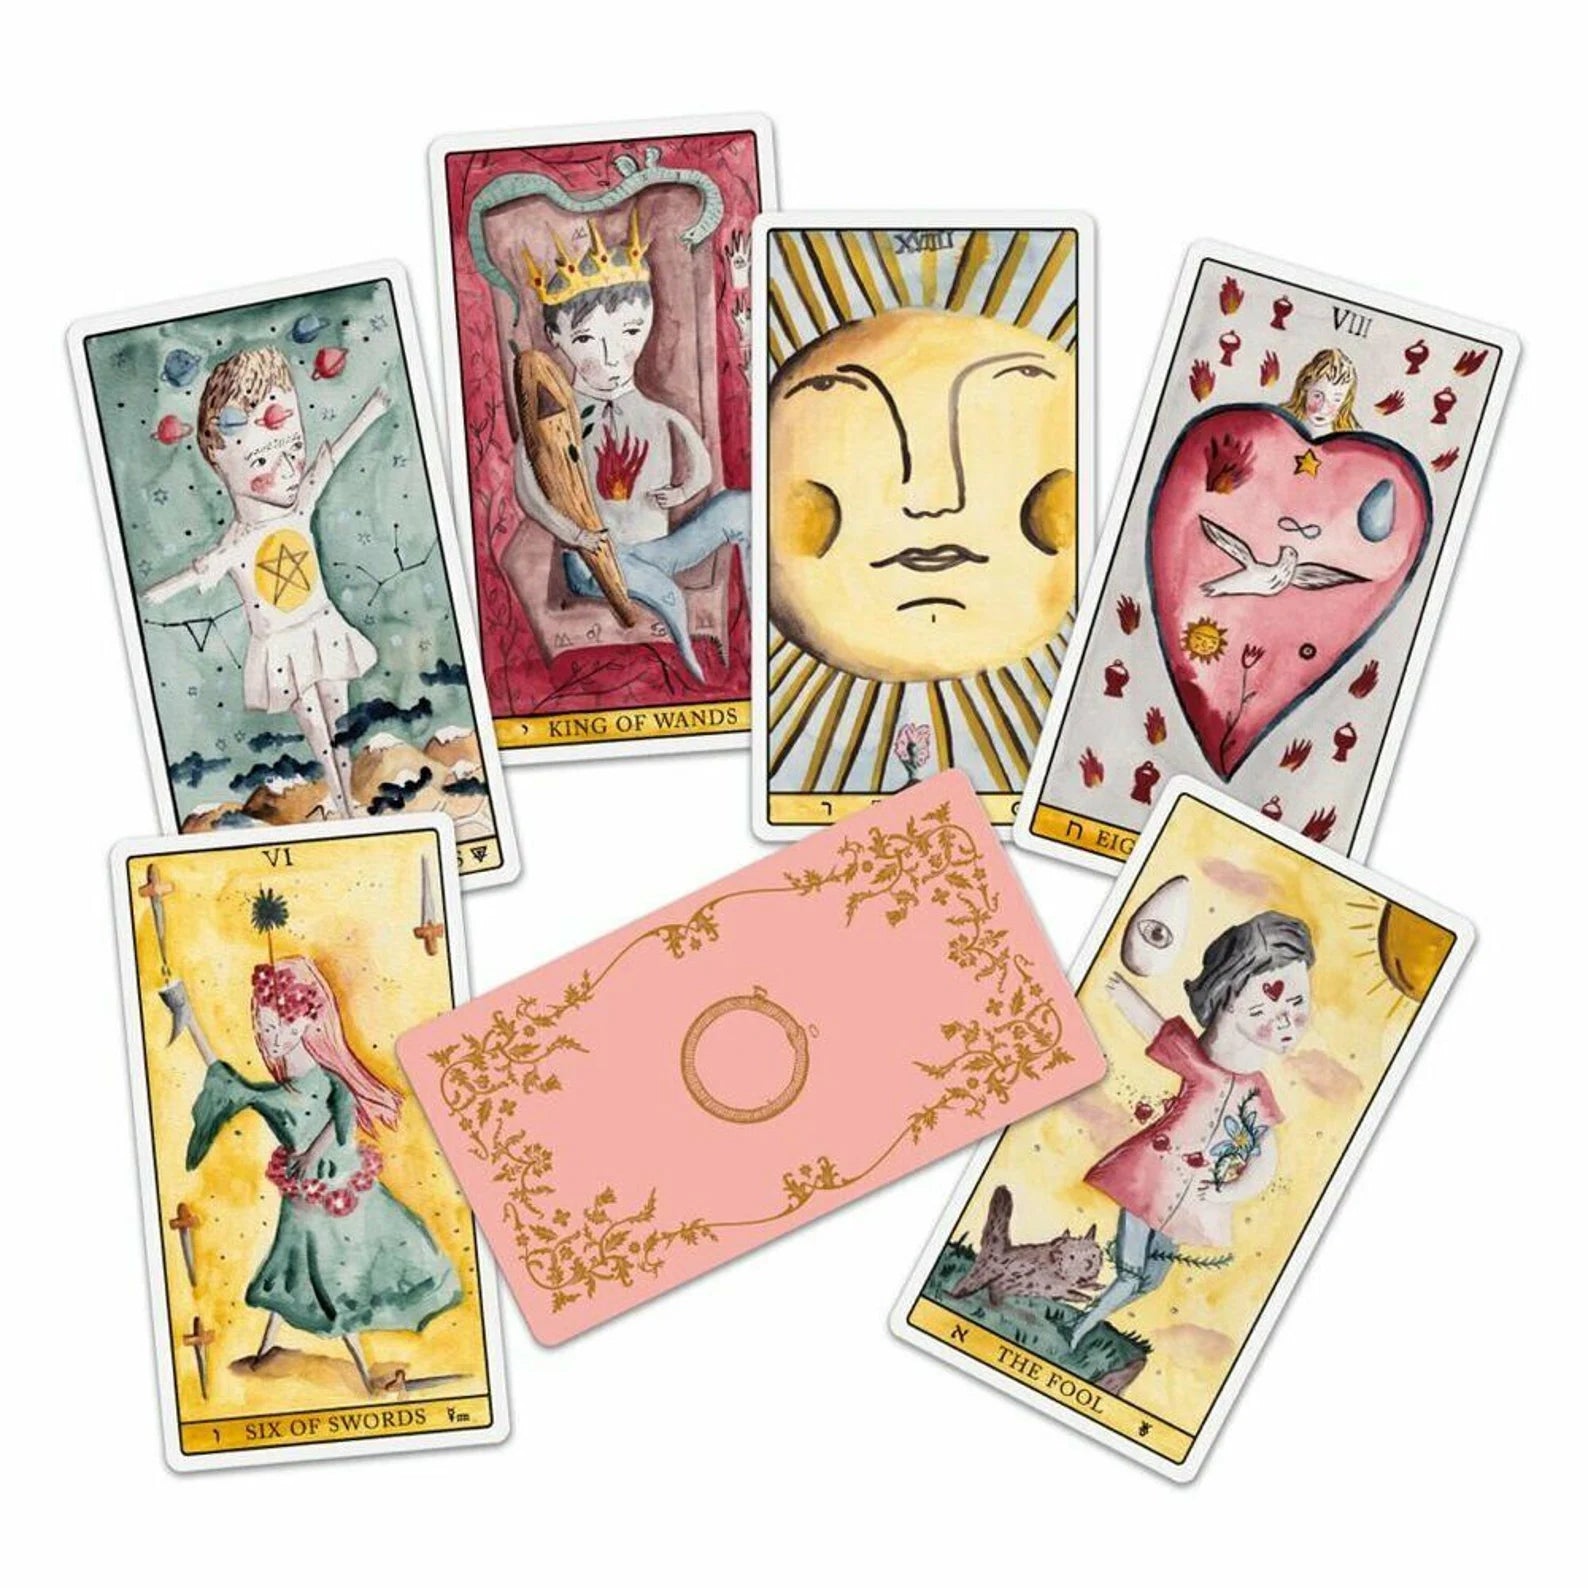 Tarot de Luz Tarot Cards